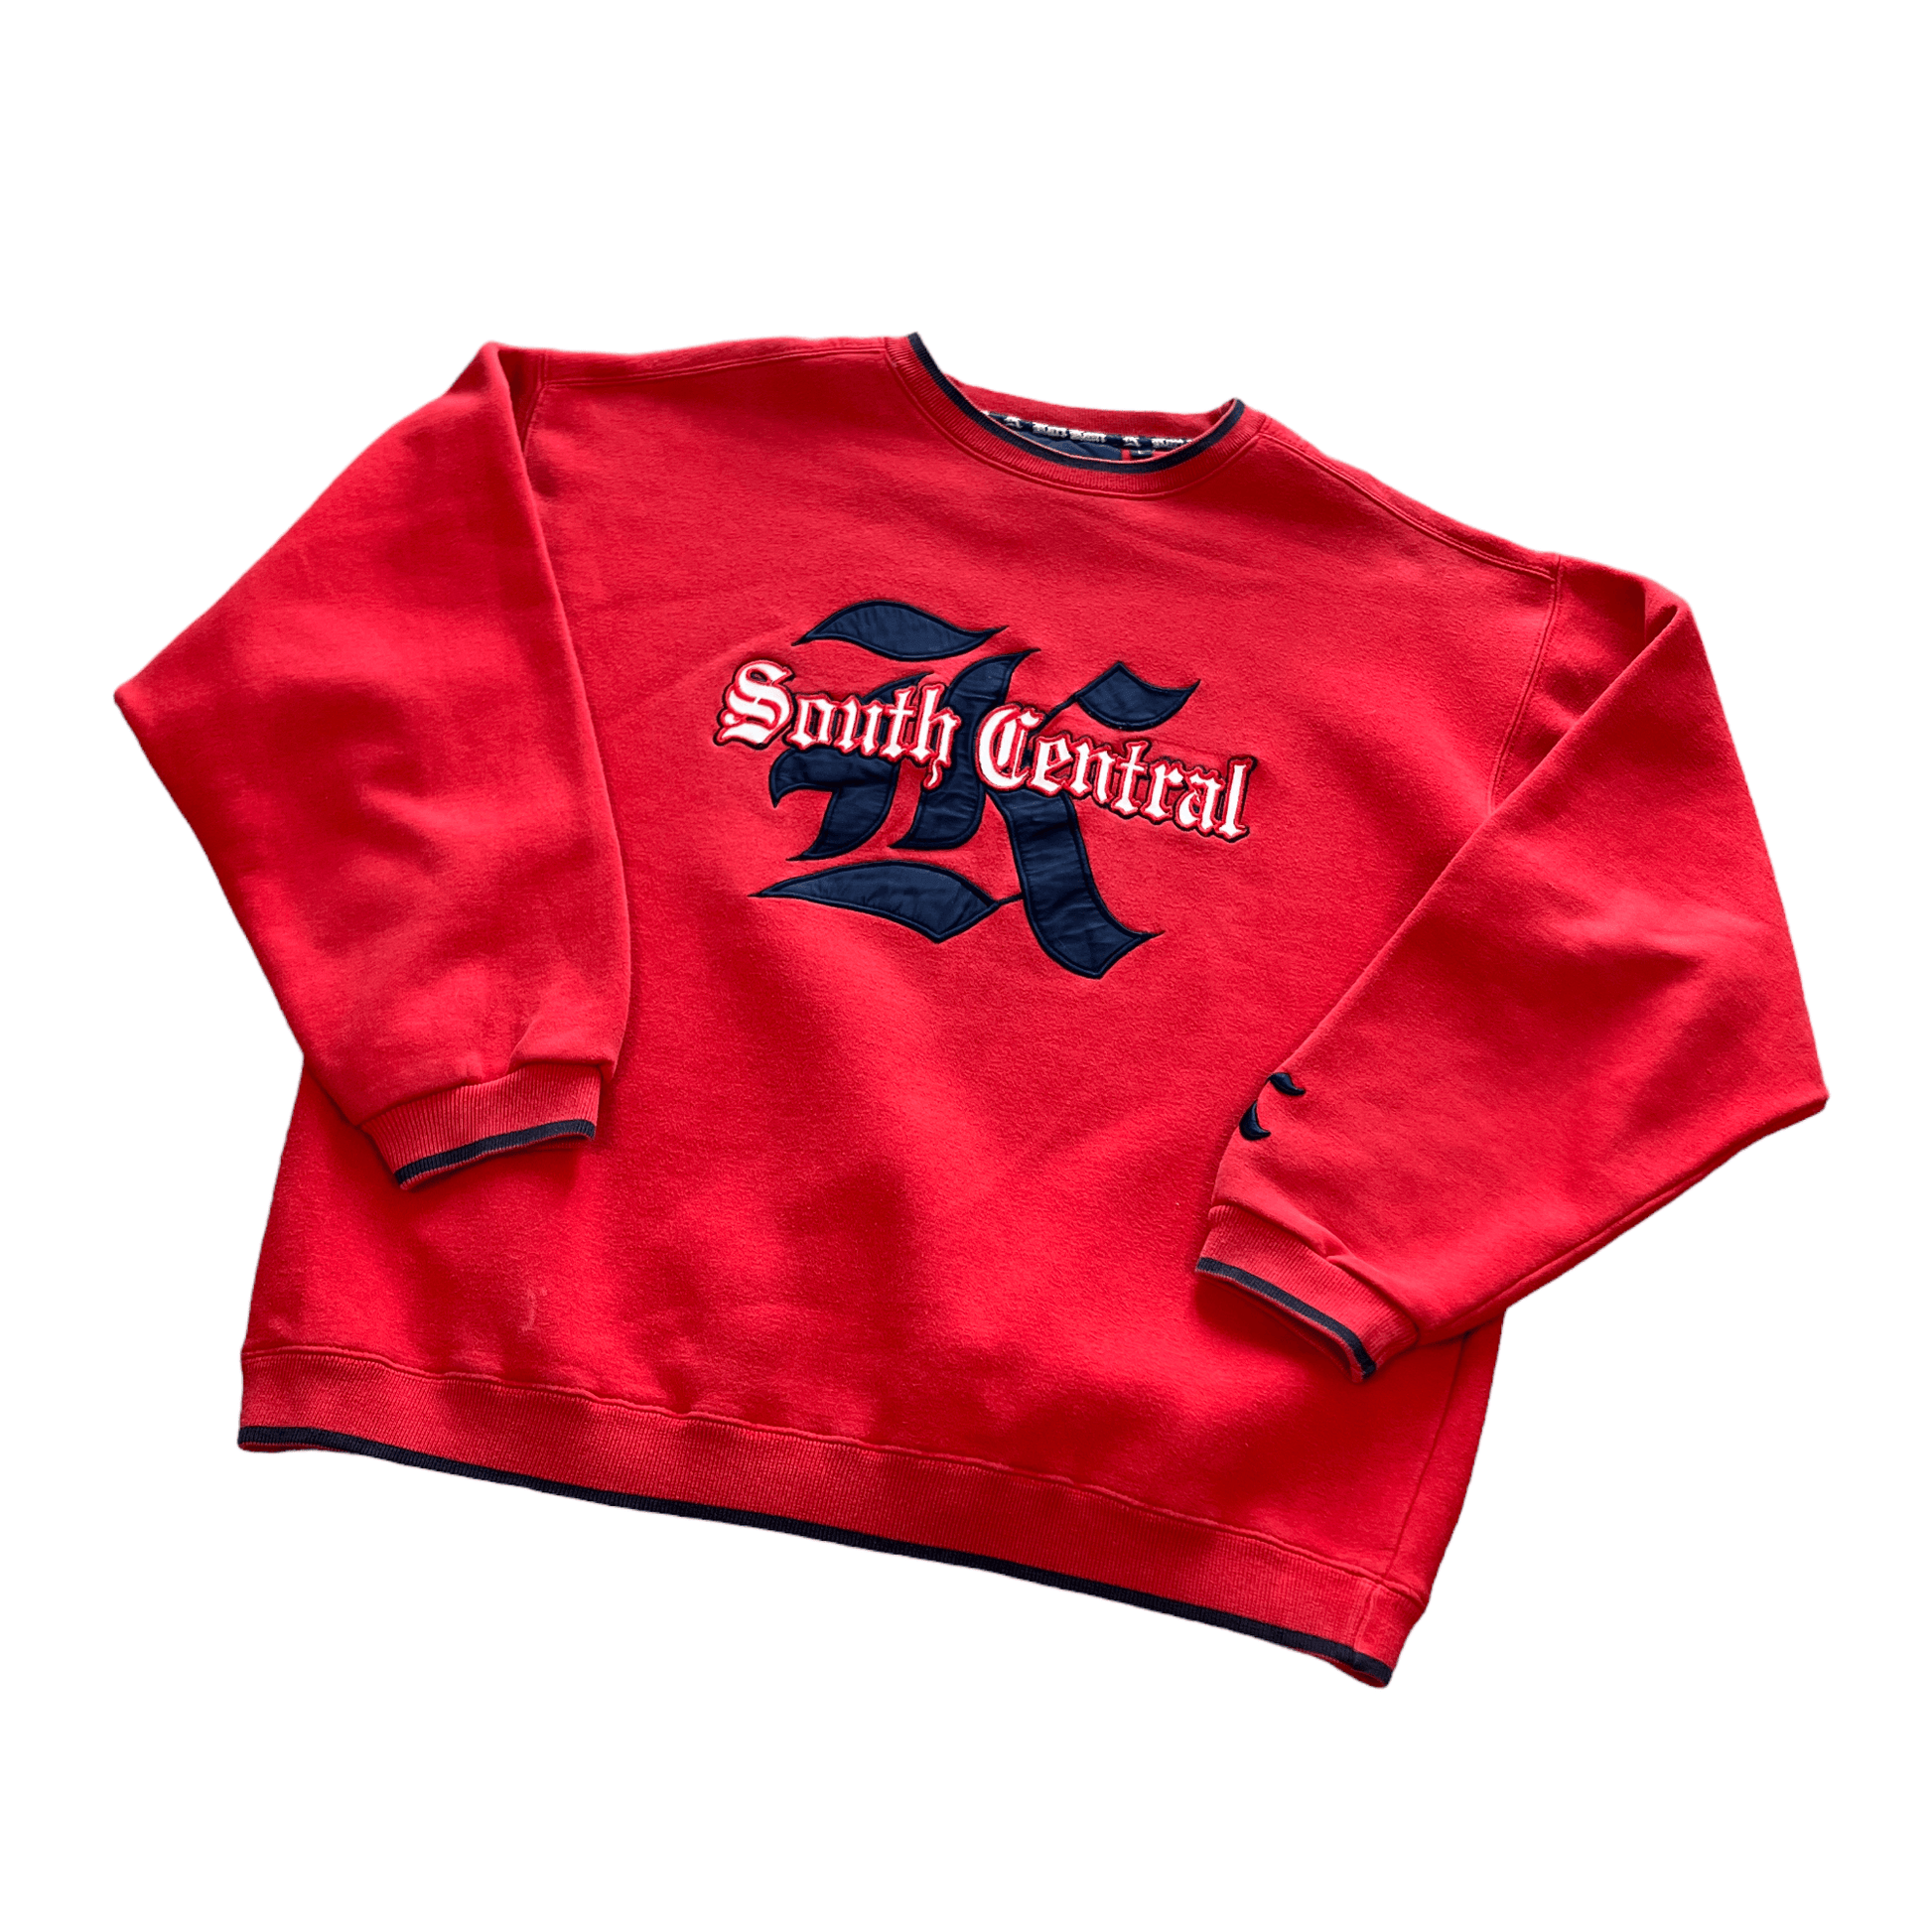 Vintage 90s Red Karl Kani Sweatshirt - Large - The Streetwear Studio